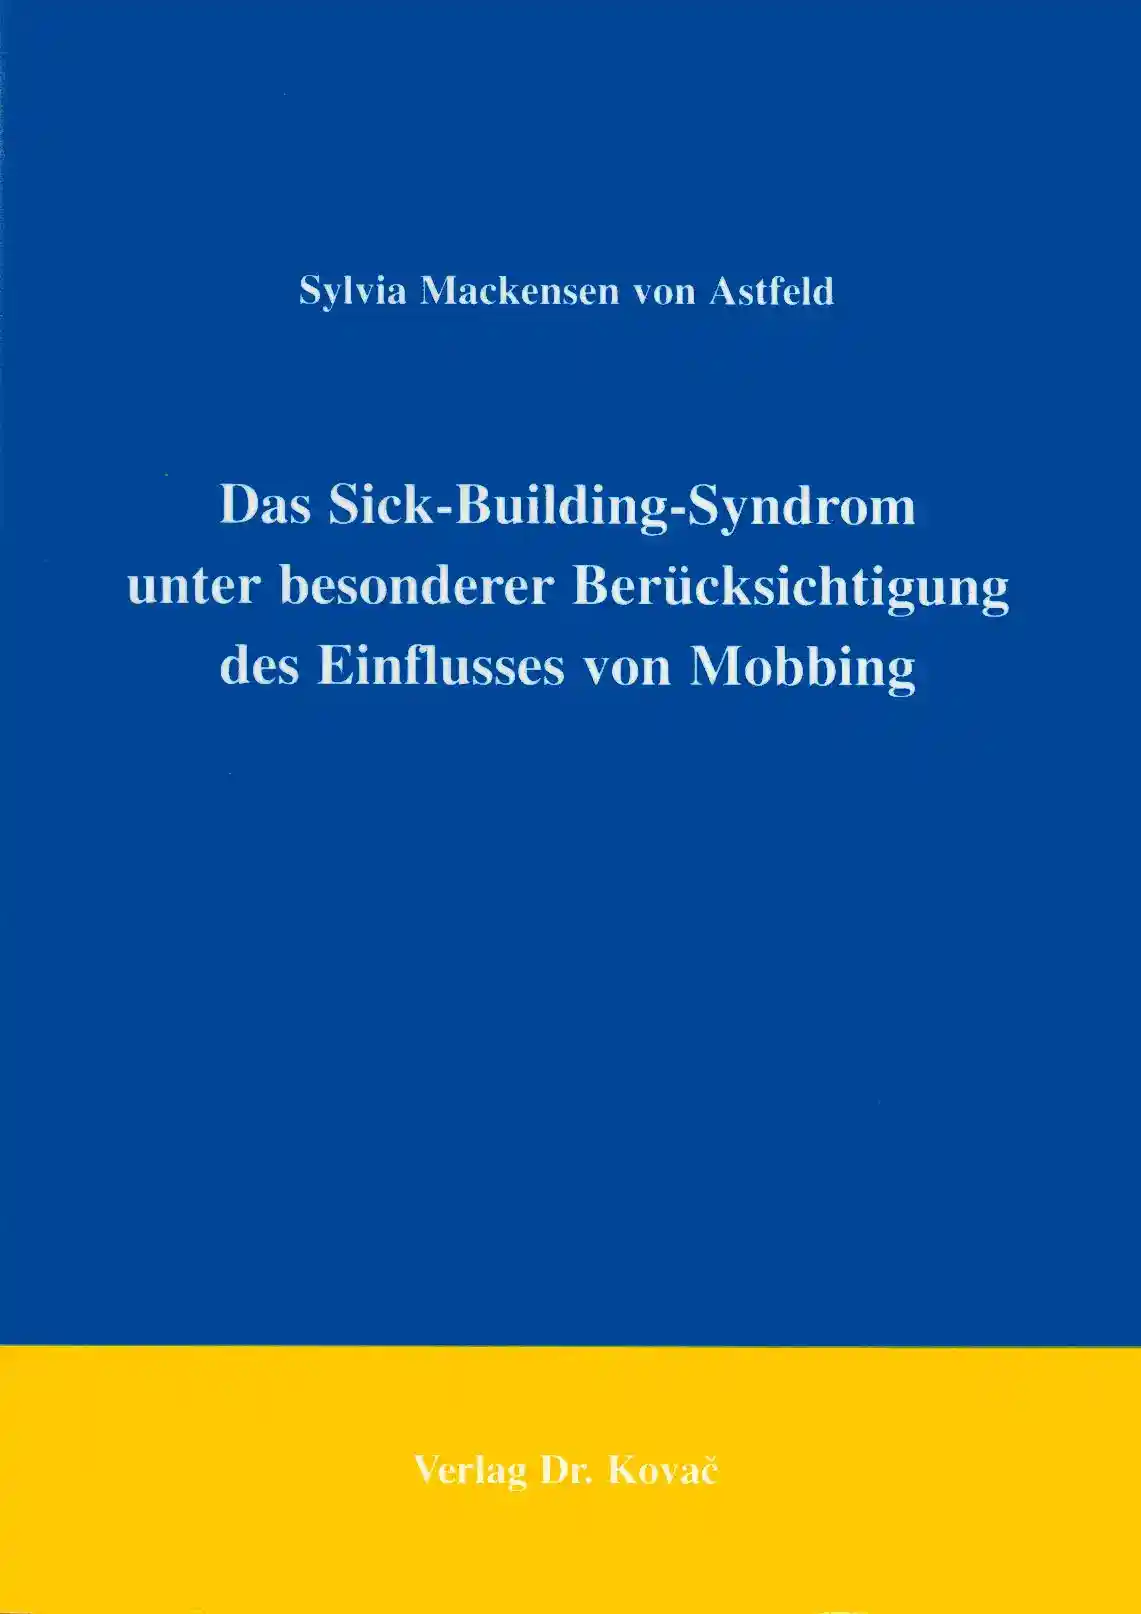 Dissertation: Das Sick-Building-Syndrom